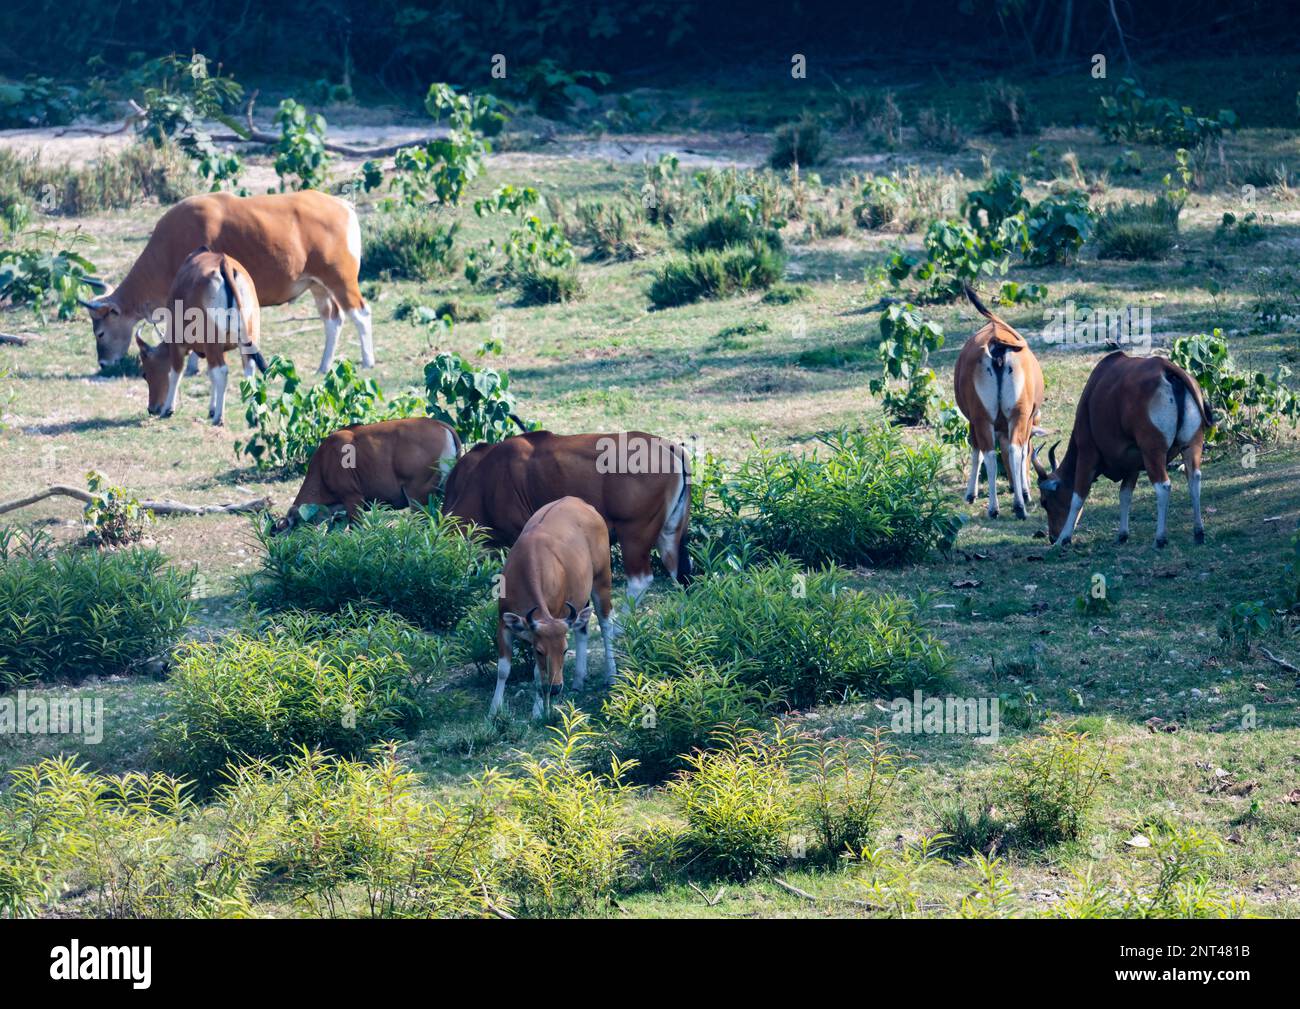 Eine Herde gefährdeter Banteng (Bos javanicus), die in freier Wildbahn weidet. Thailand. Stockfoto